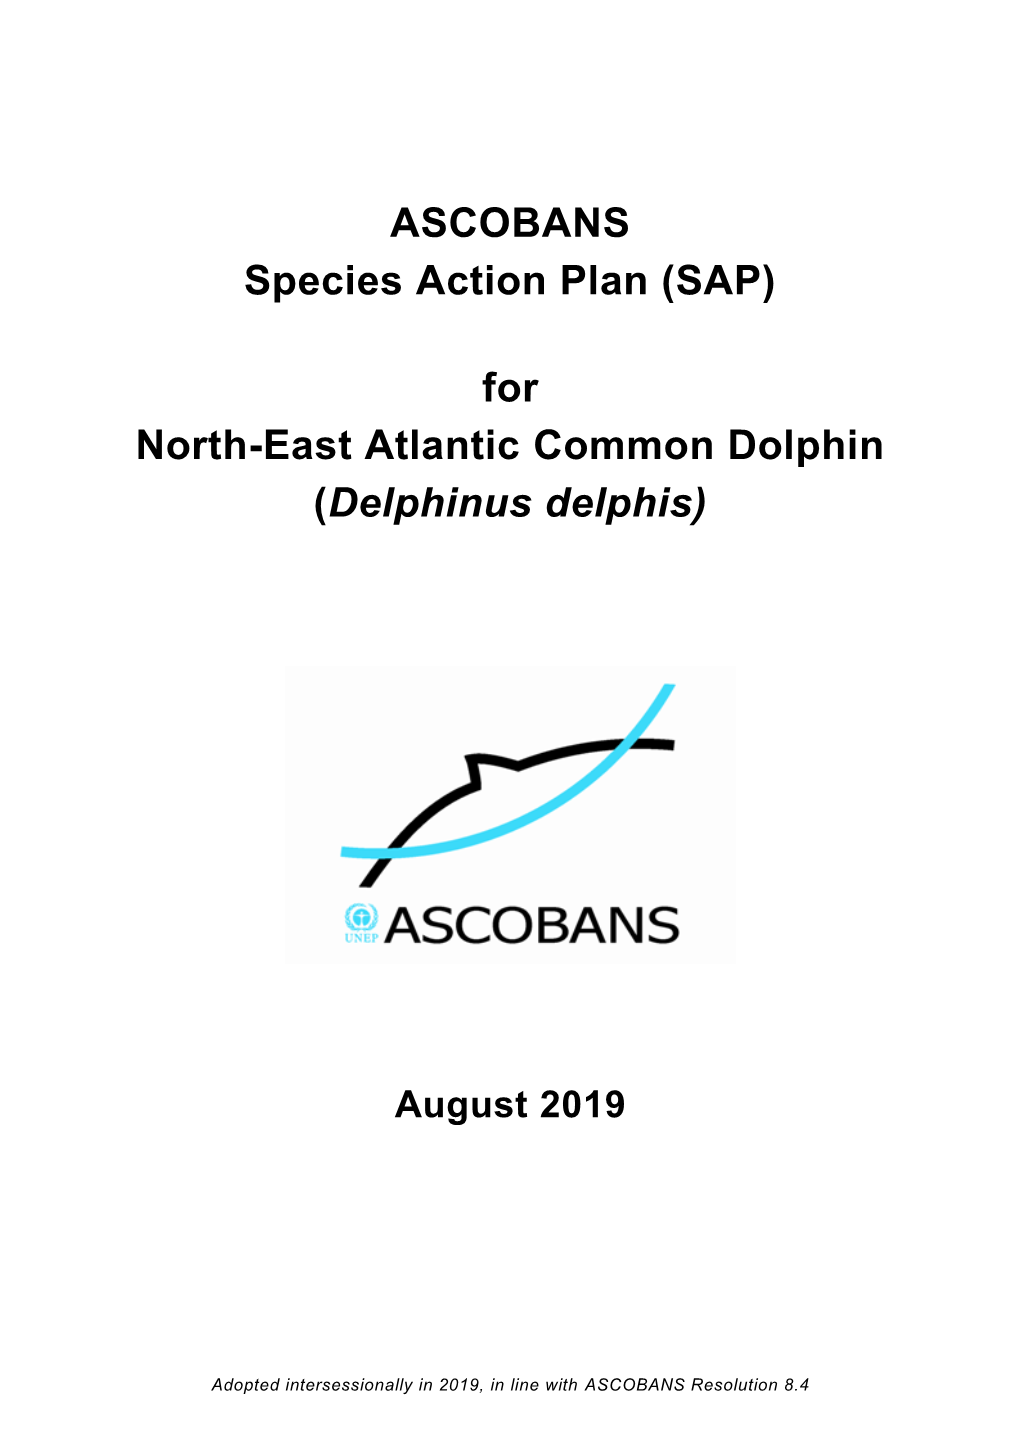 For North-East Atlantic Common Dolphin (Delphinus Delphis)